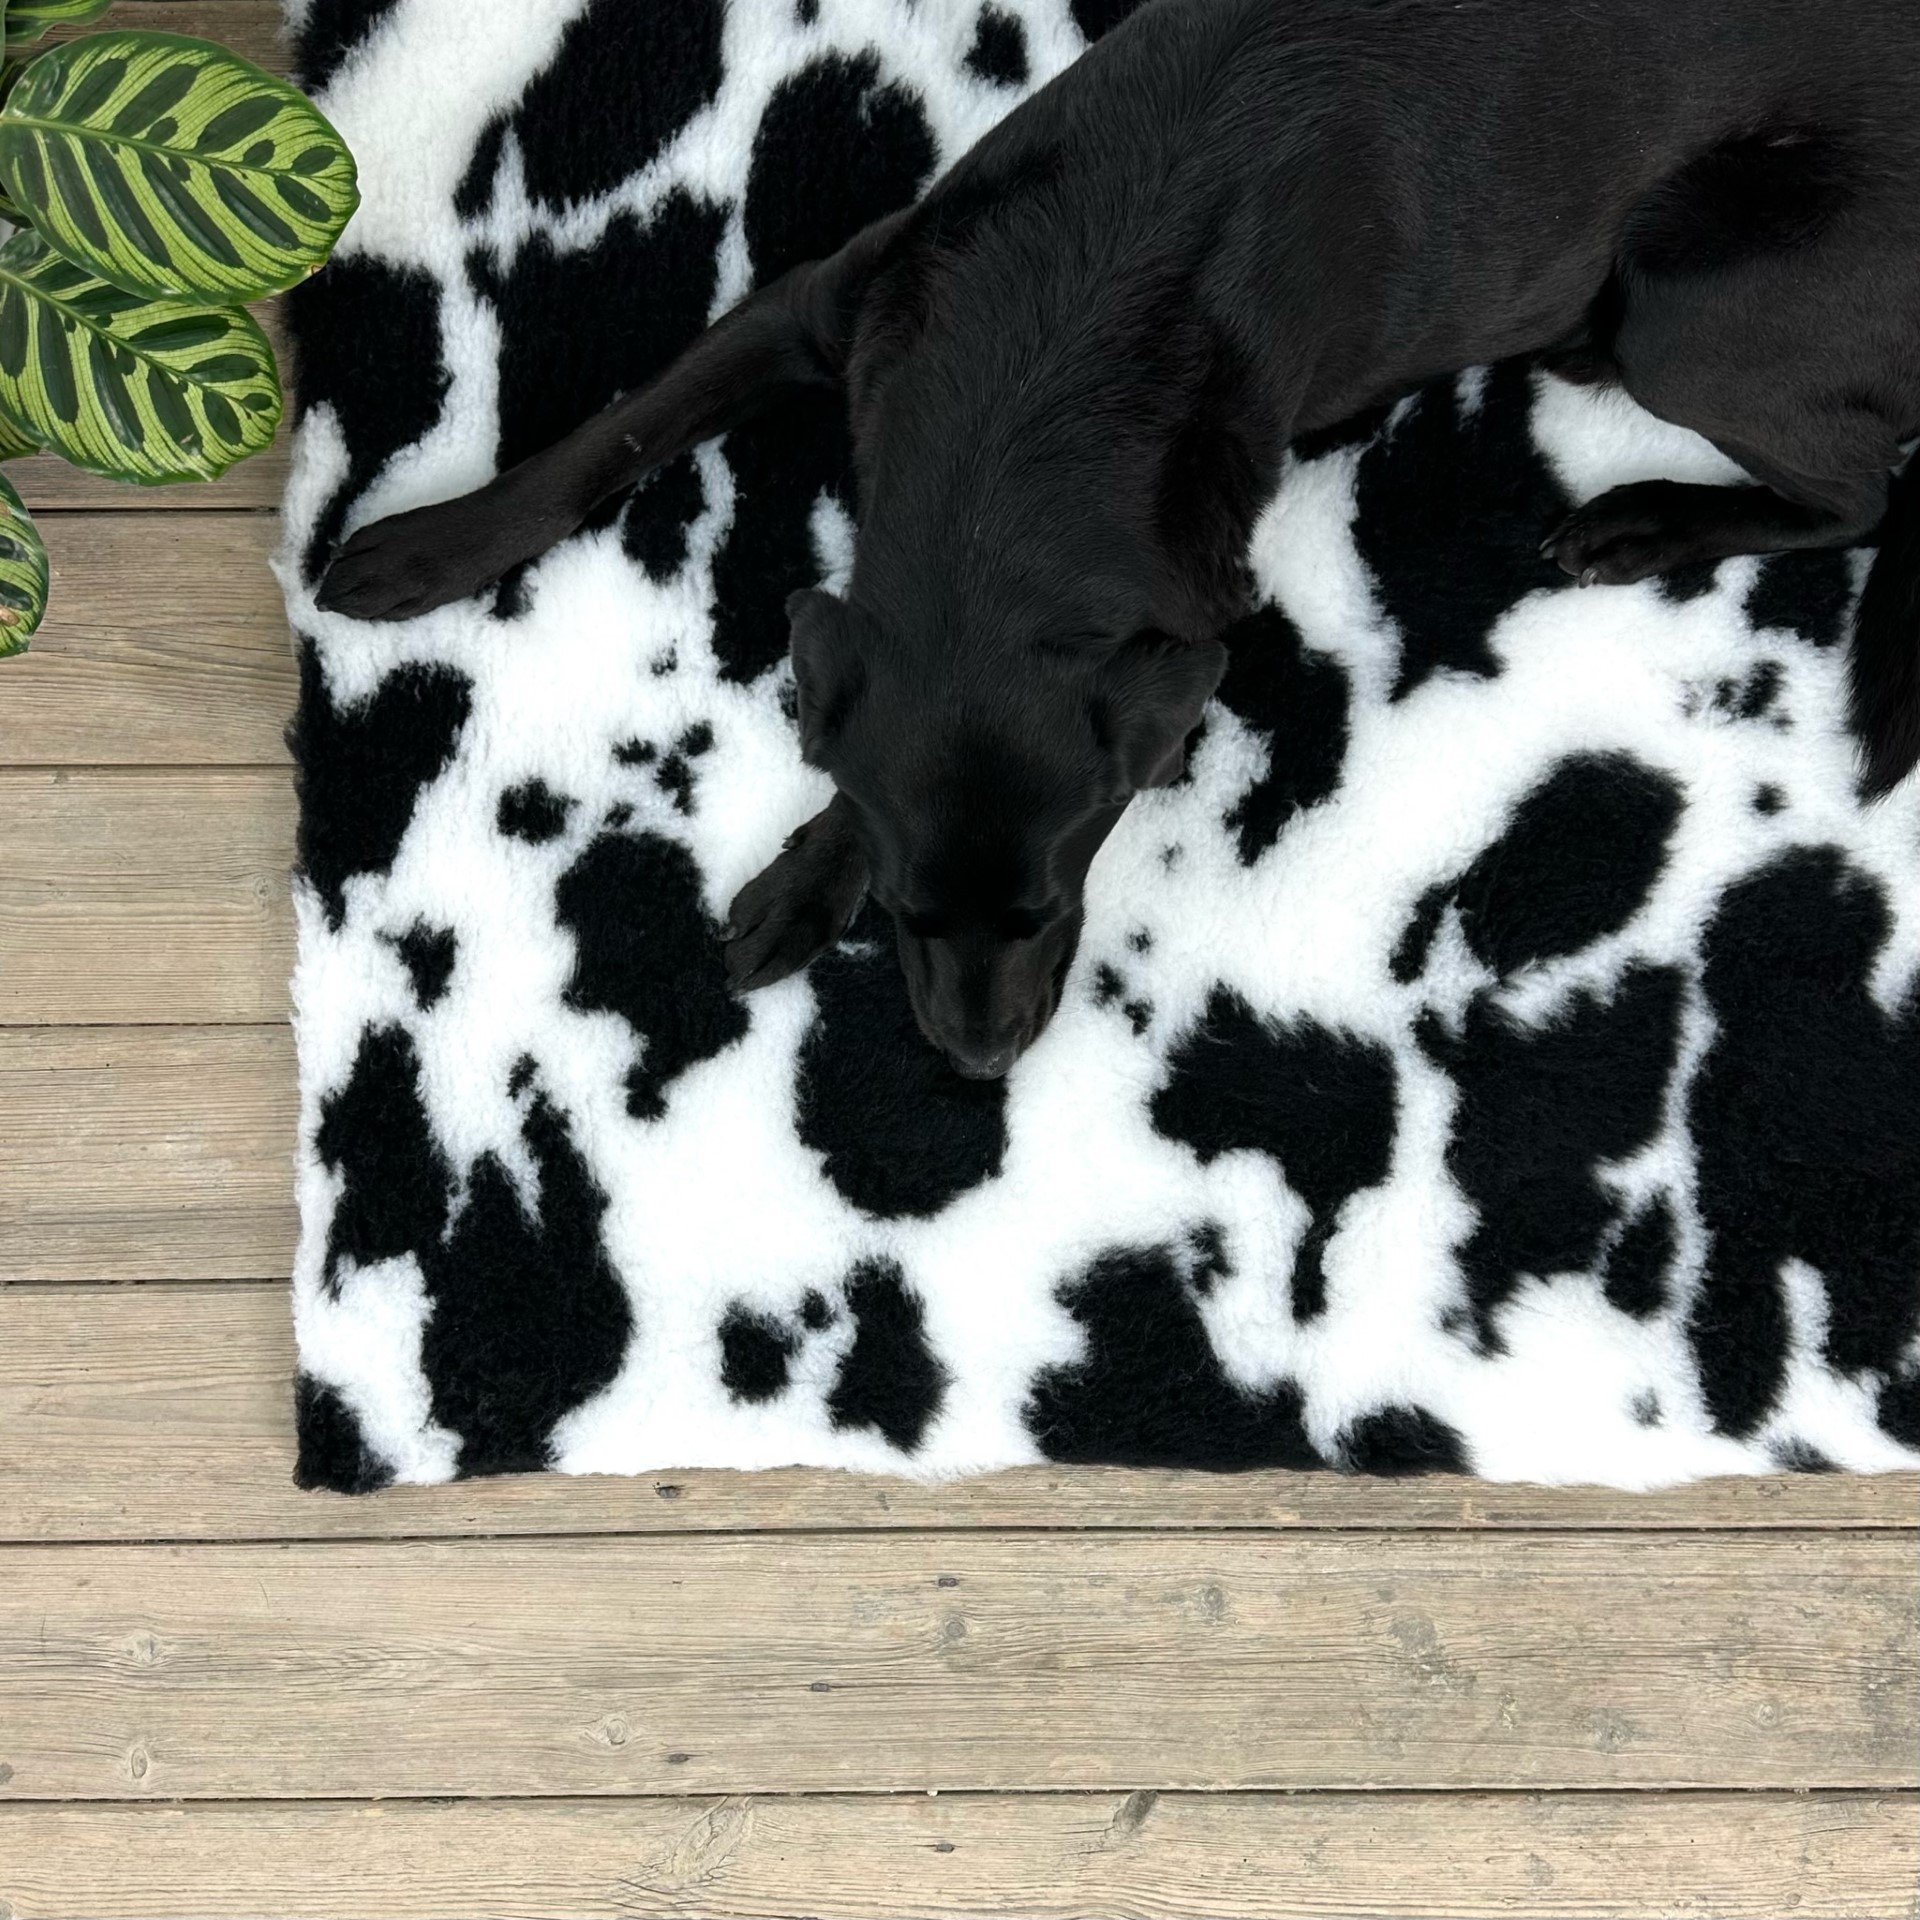 Cow Print Black White Vet Bedding  Non-Slip Whelping Fleece Dog Puppy Pro Bed Cut as Mats or Rolls.